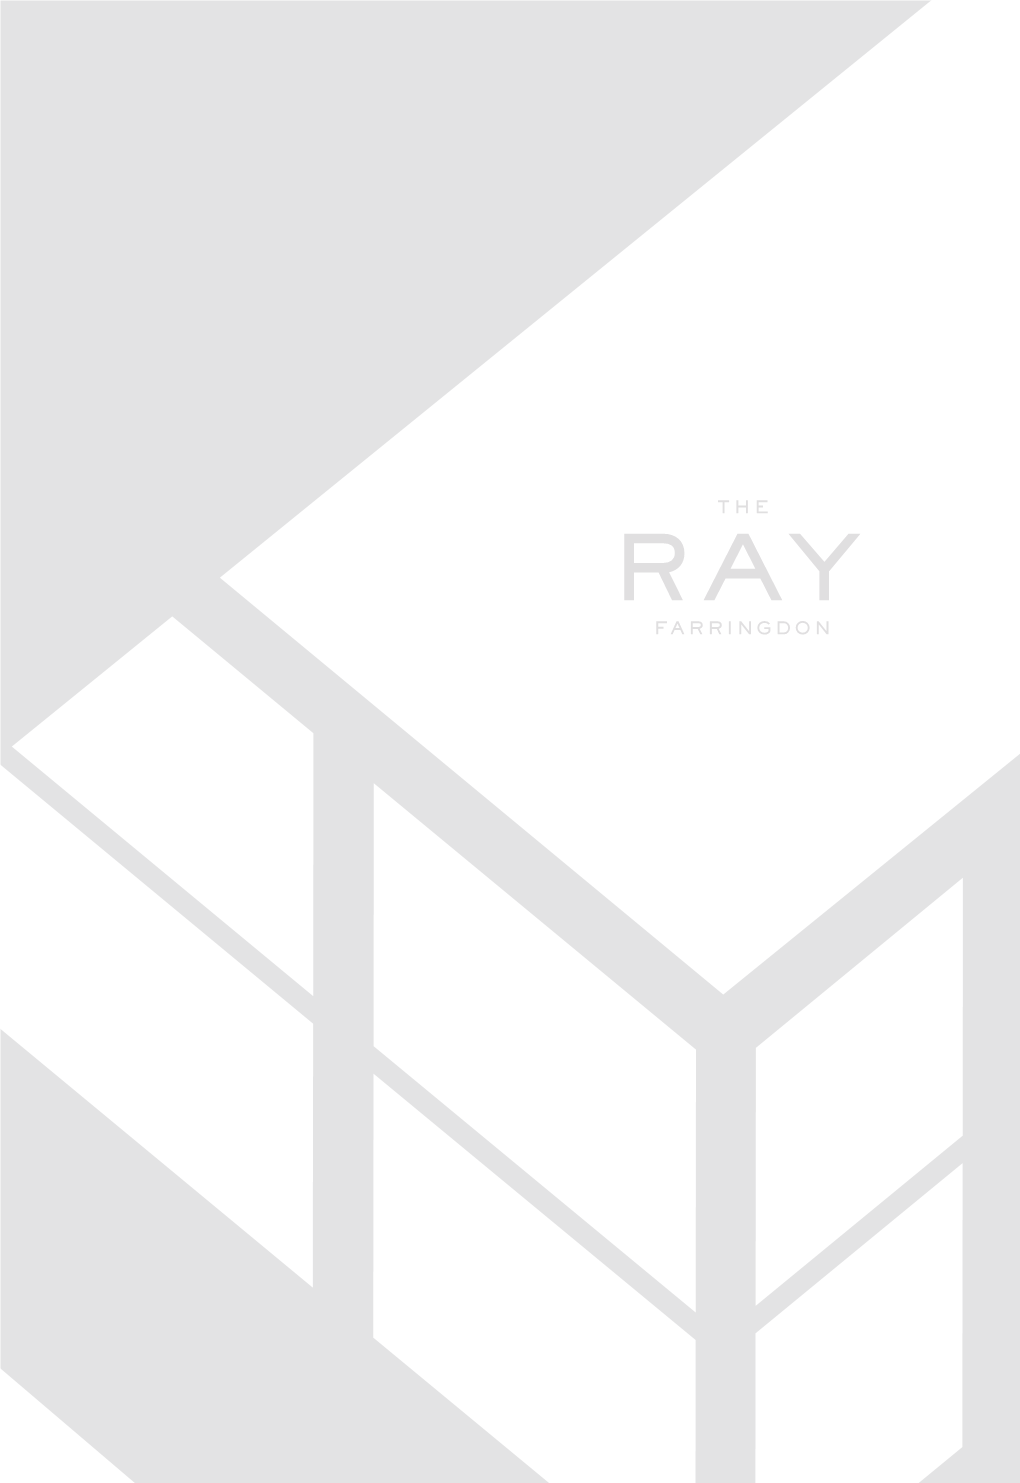 The-Ray-Farringdon-Brochure.Pdf